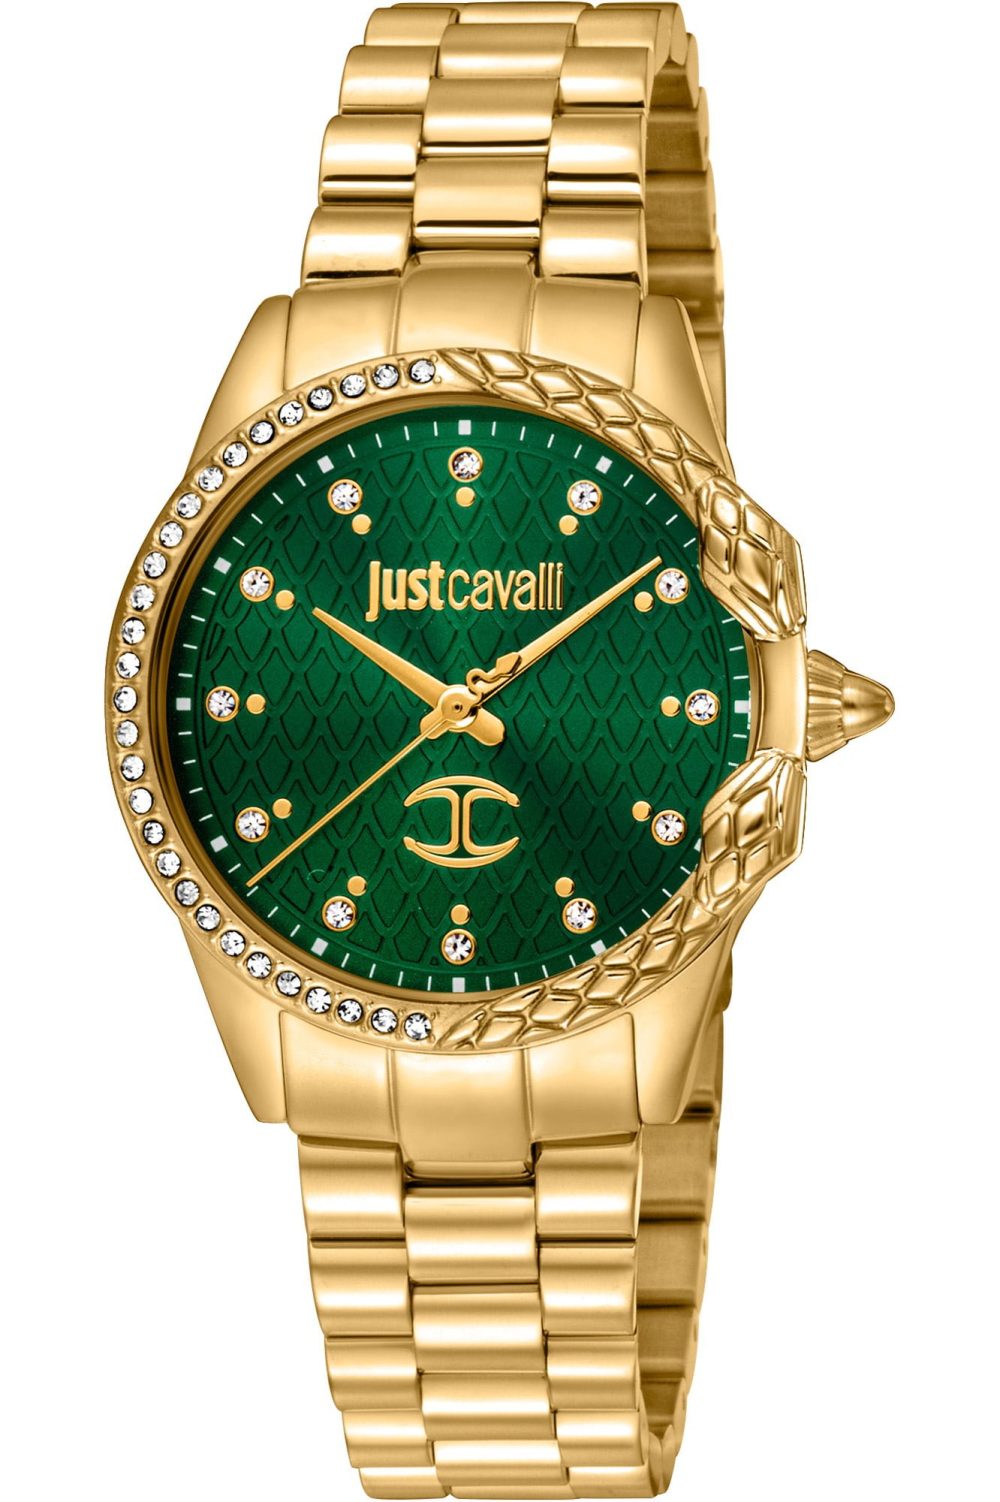 Just Cavalli Animalier Watch - Diva JC1L095M0365 - watchello.com